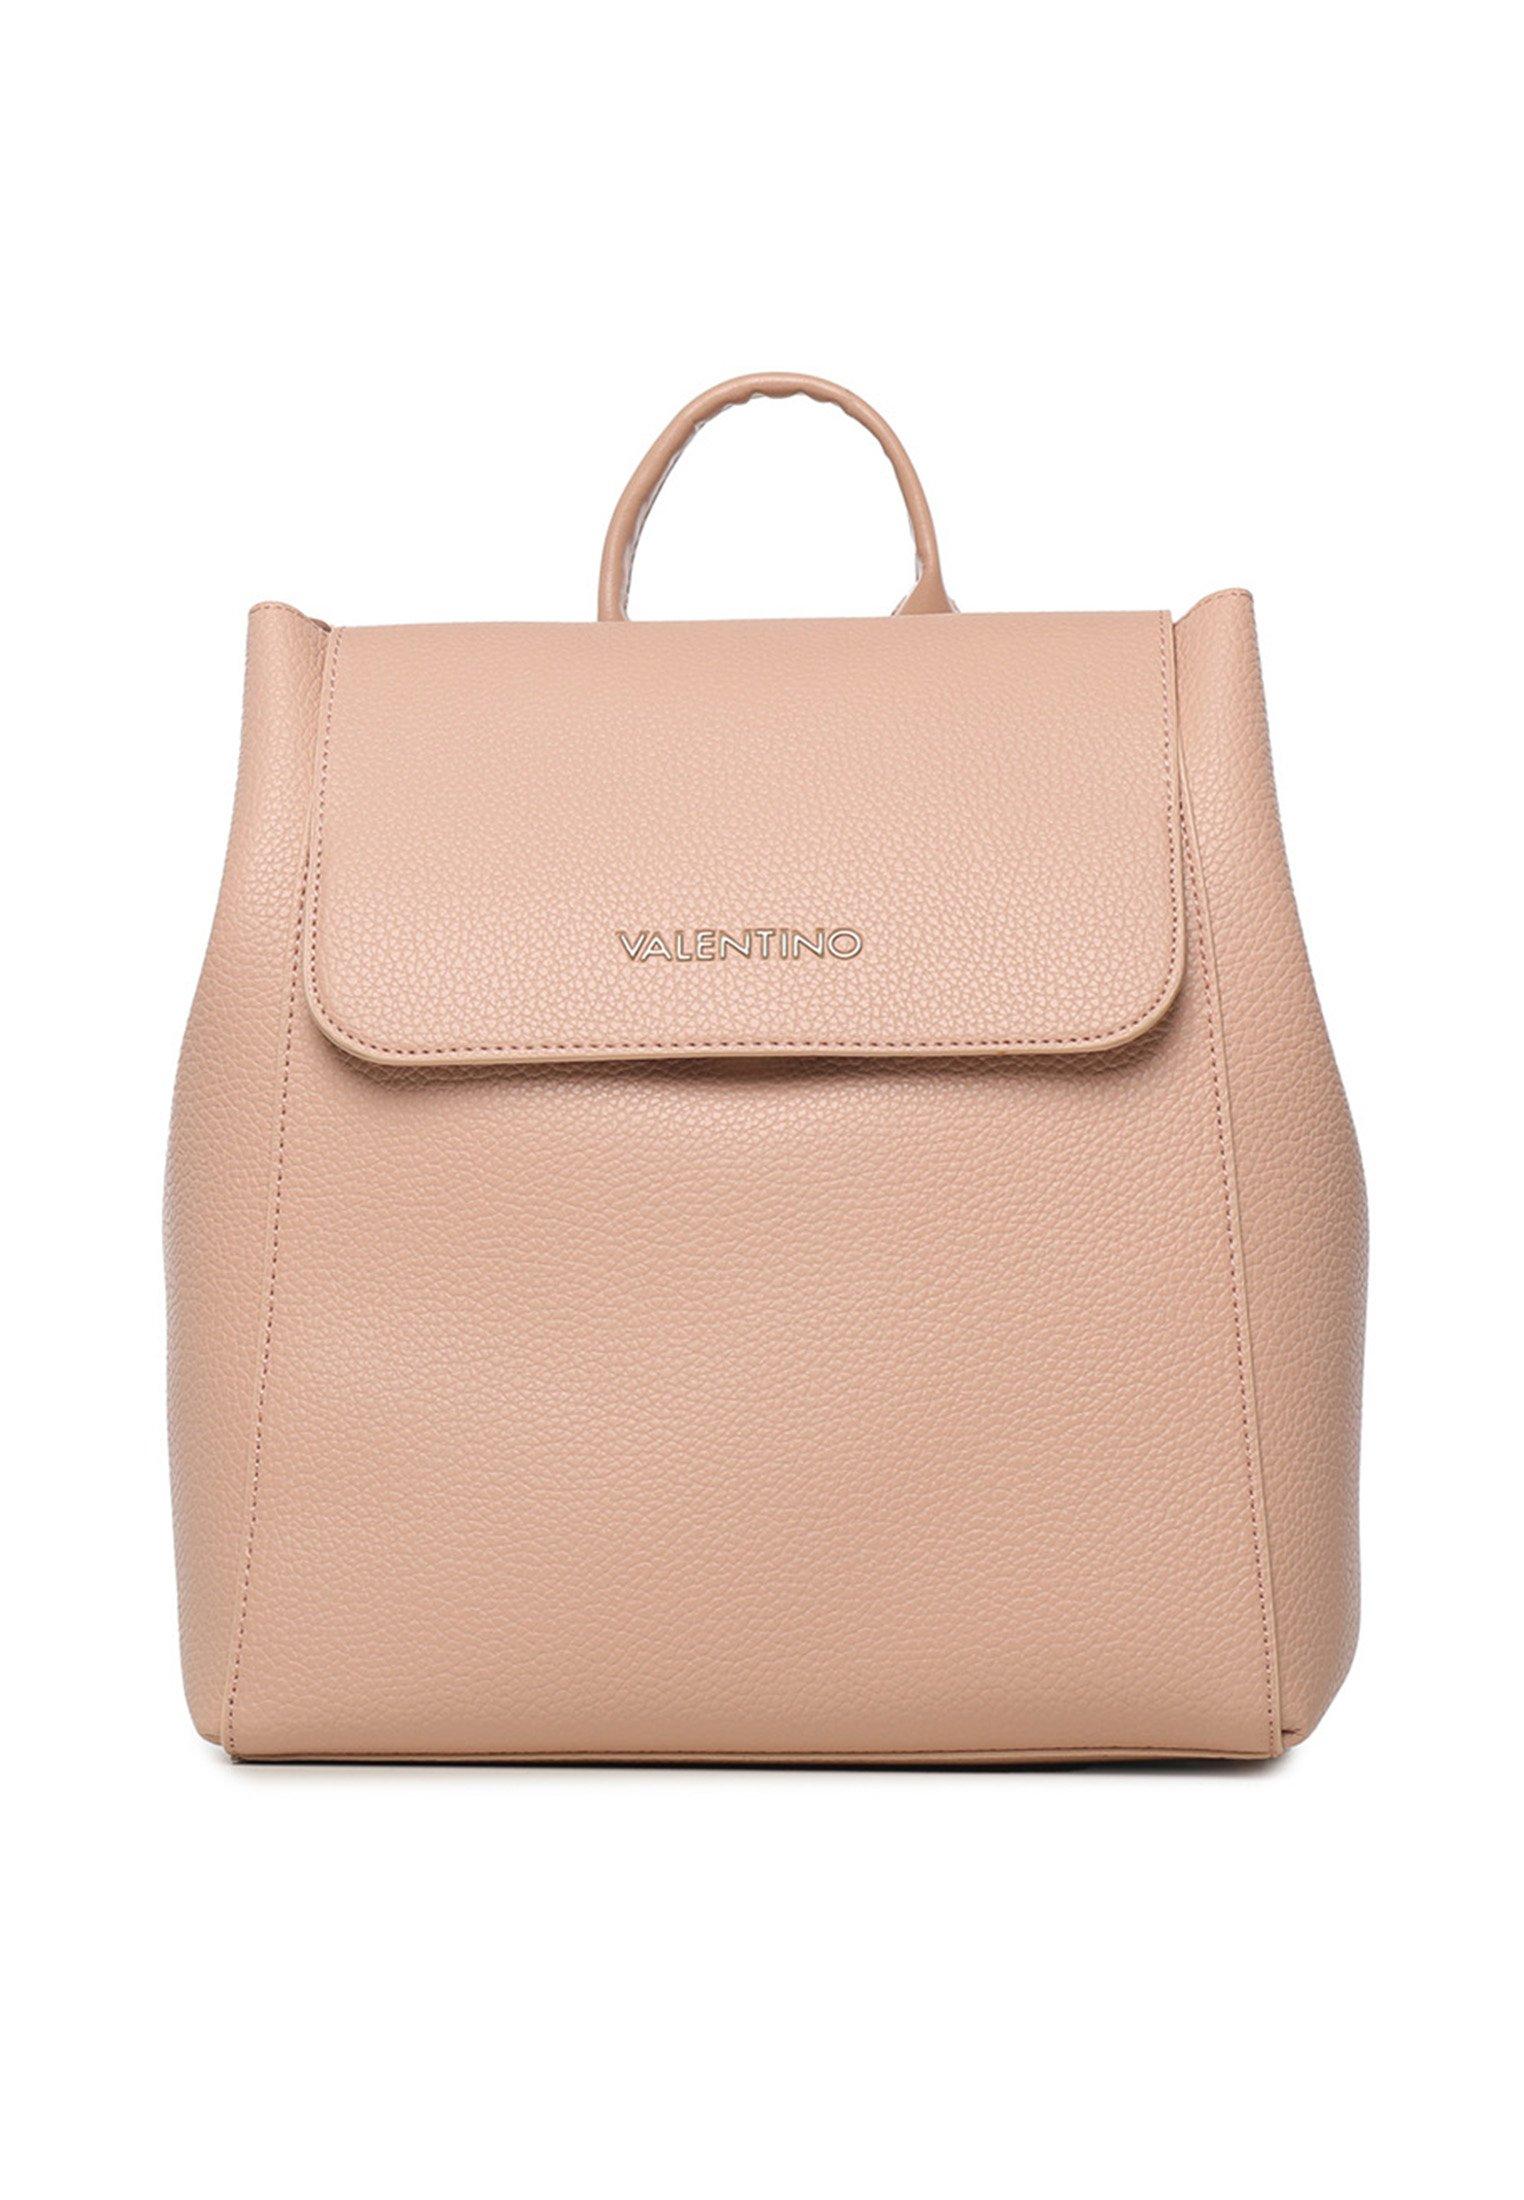 Valentino Handbags  Superman  Handtasche 